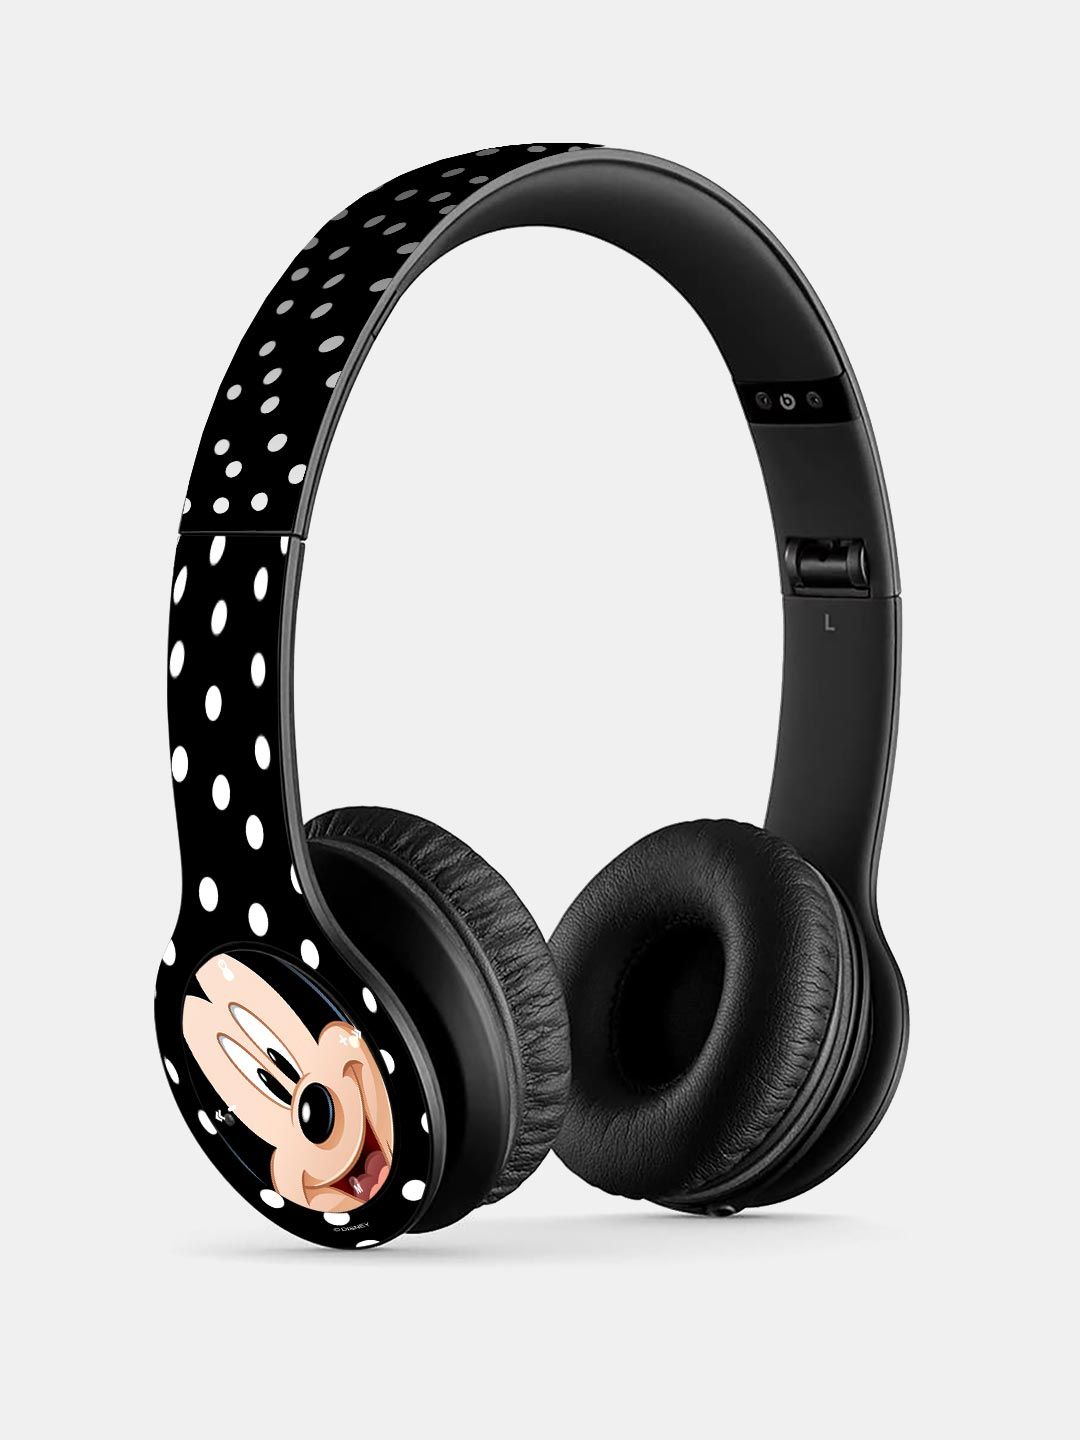 Macmerise P47 Zoom Up Mickey - P47 Wireless On Ear Headphones